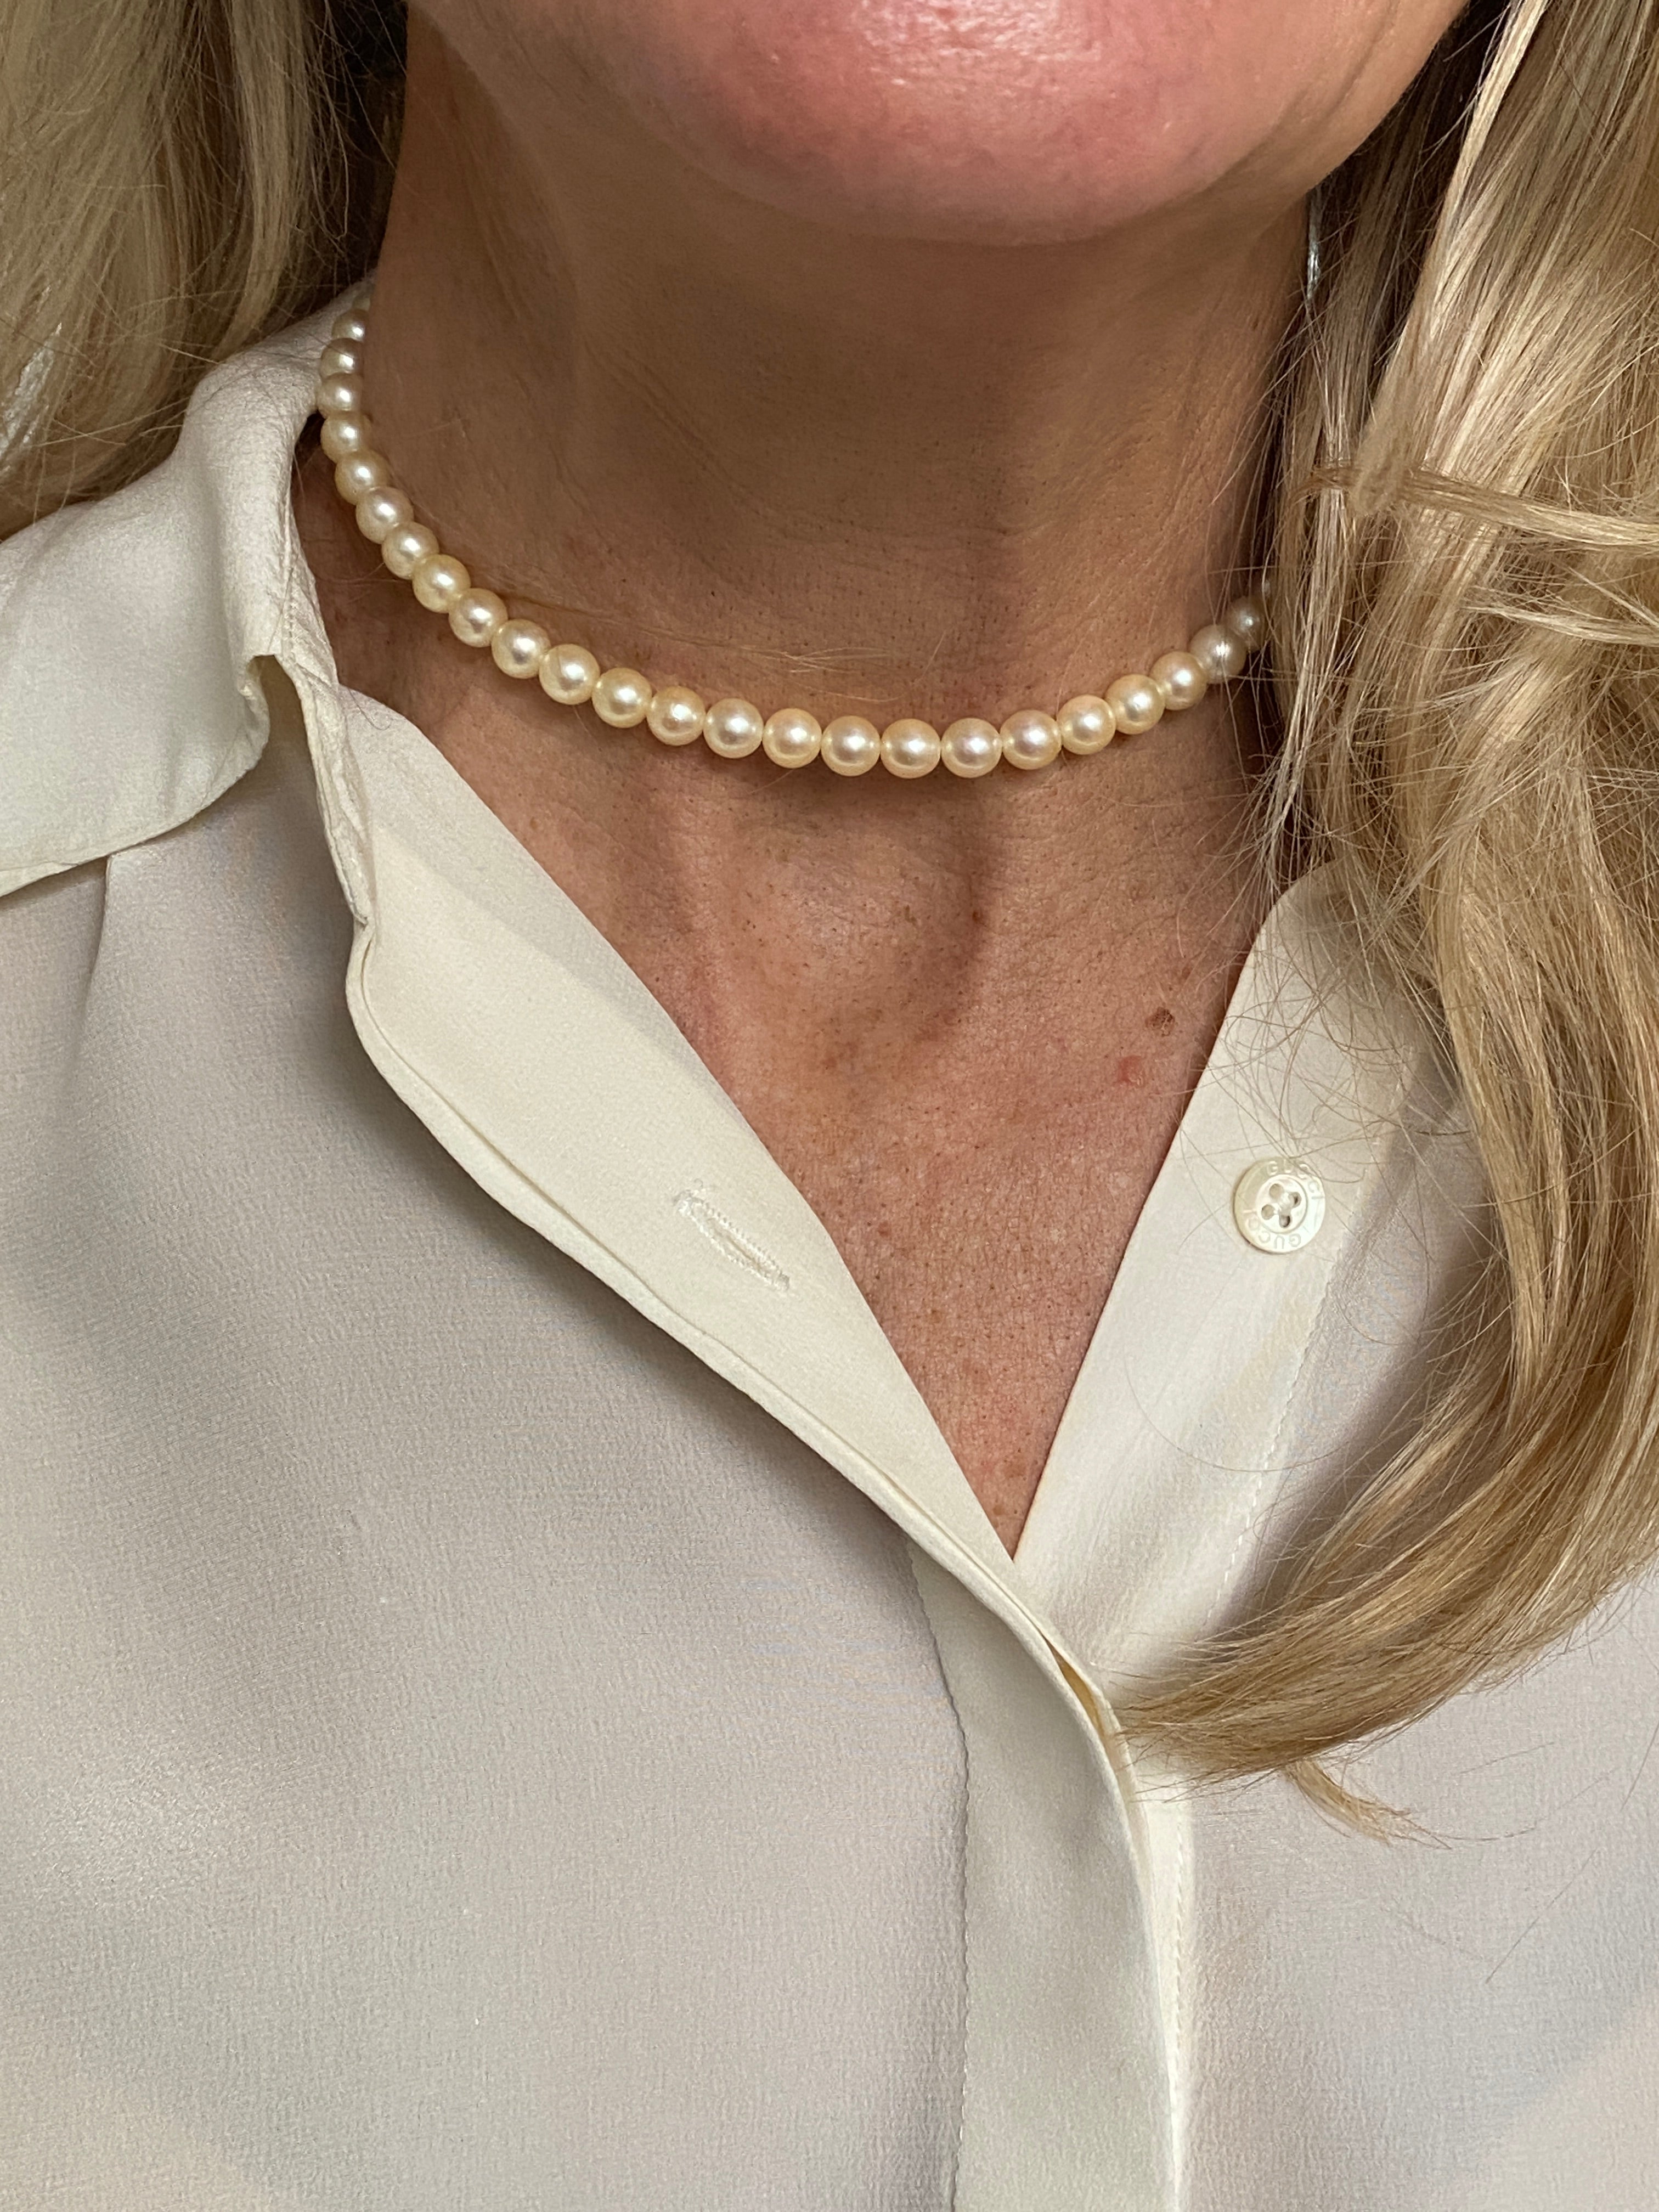 Pearl necklace with multi-stone diamond clasp